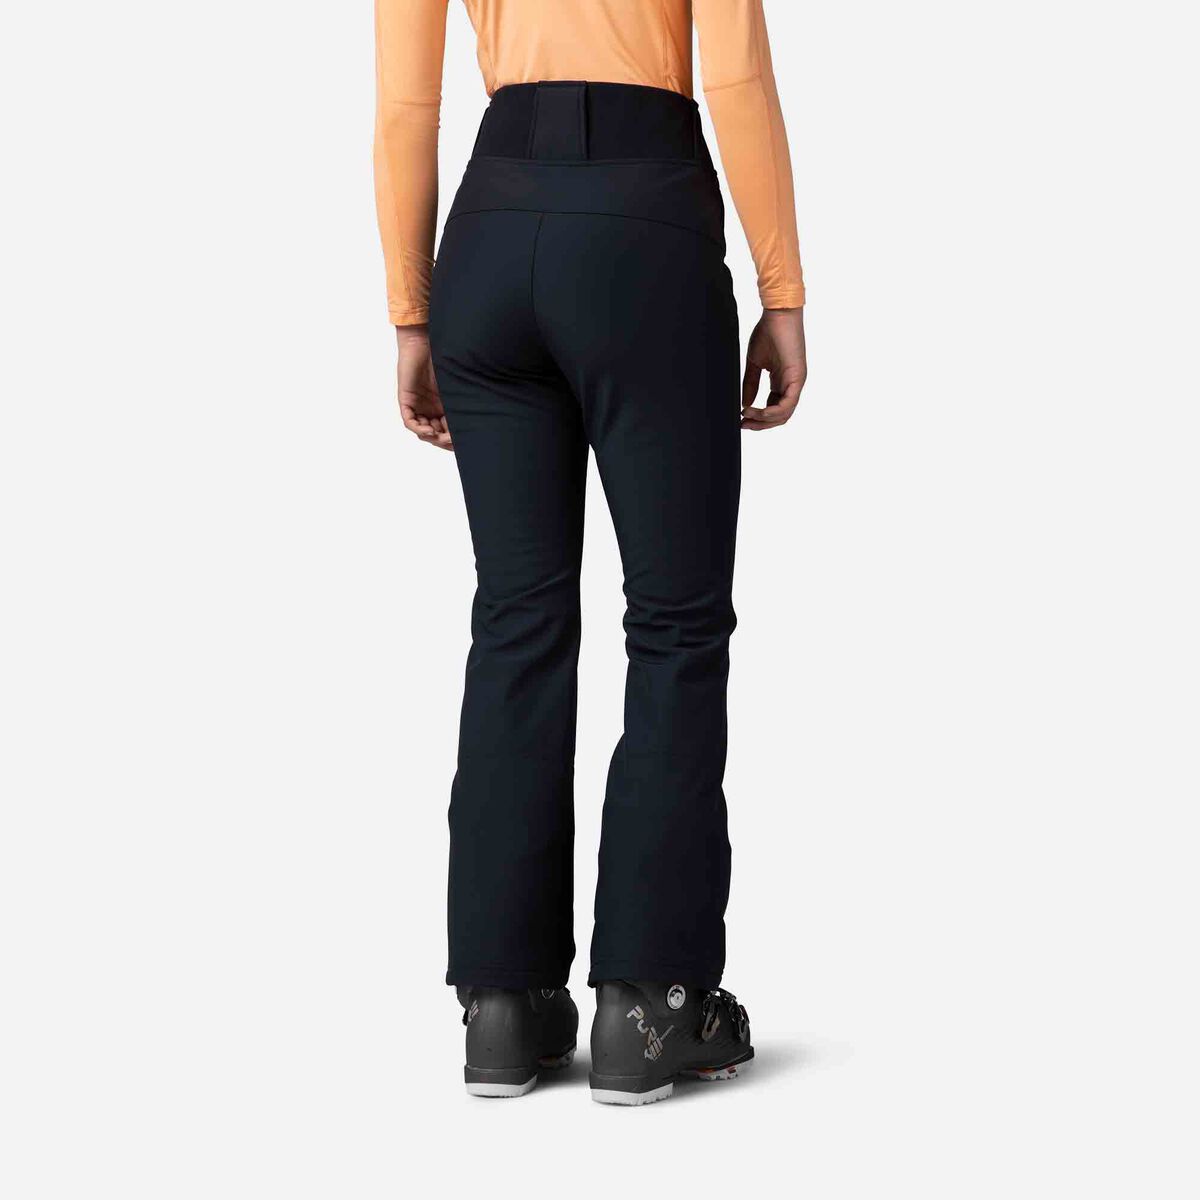 Kelly, Softshell Pants softshell ski pants women black